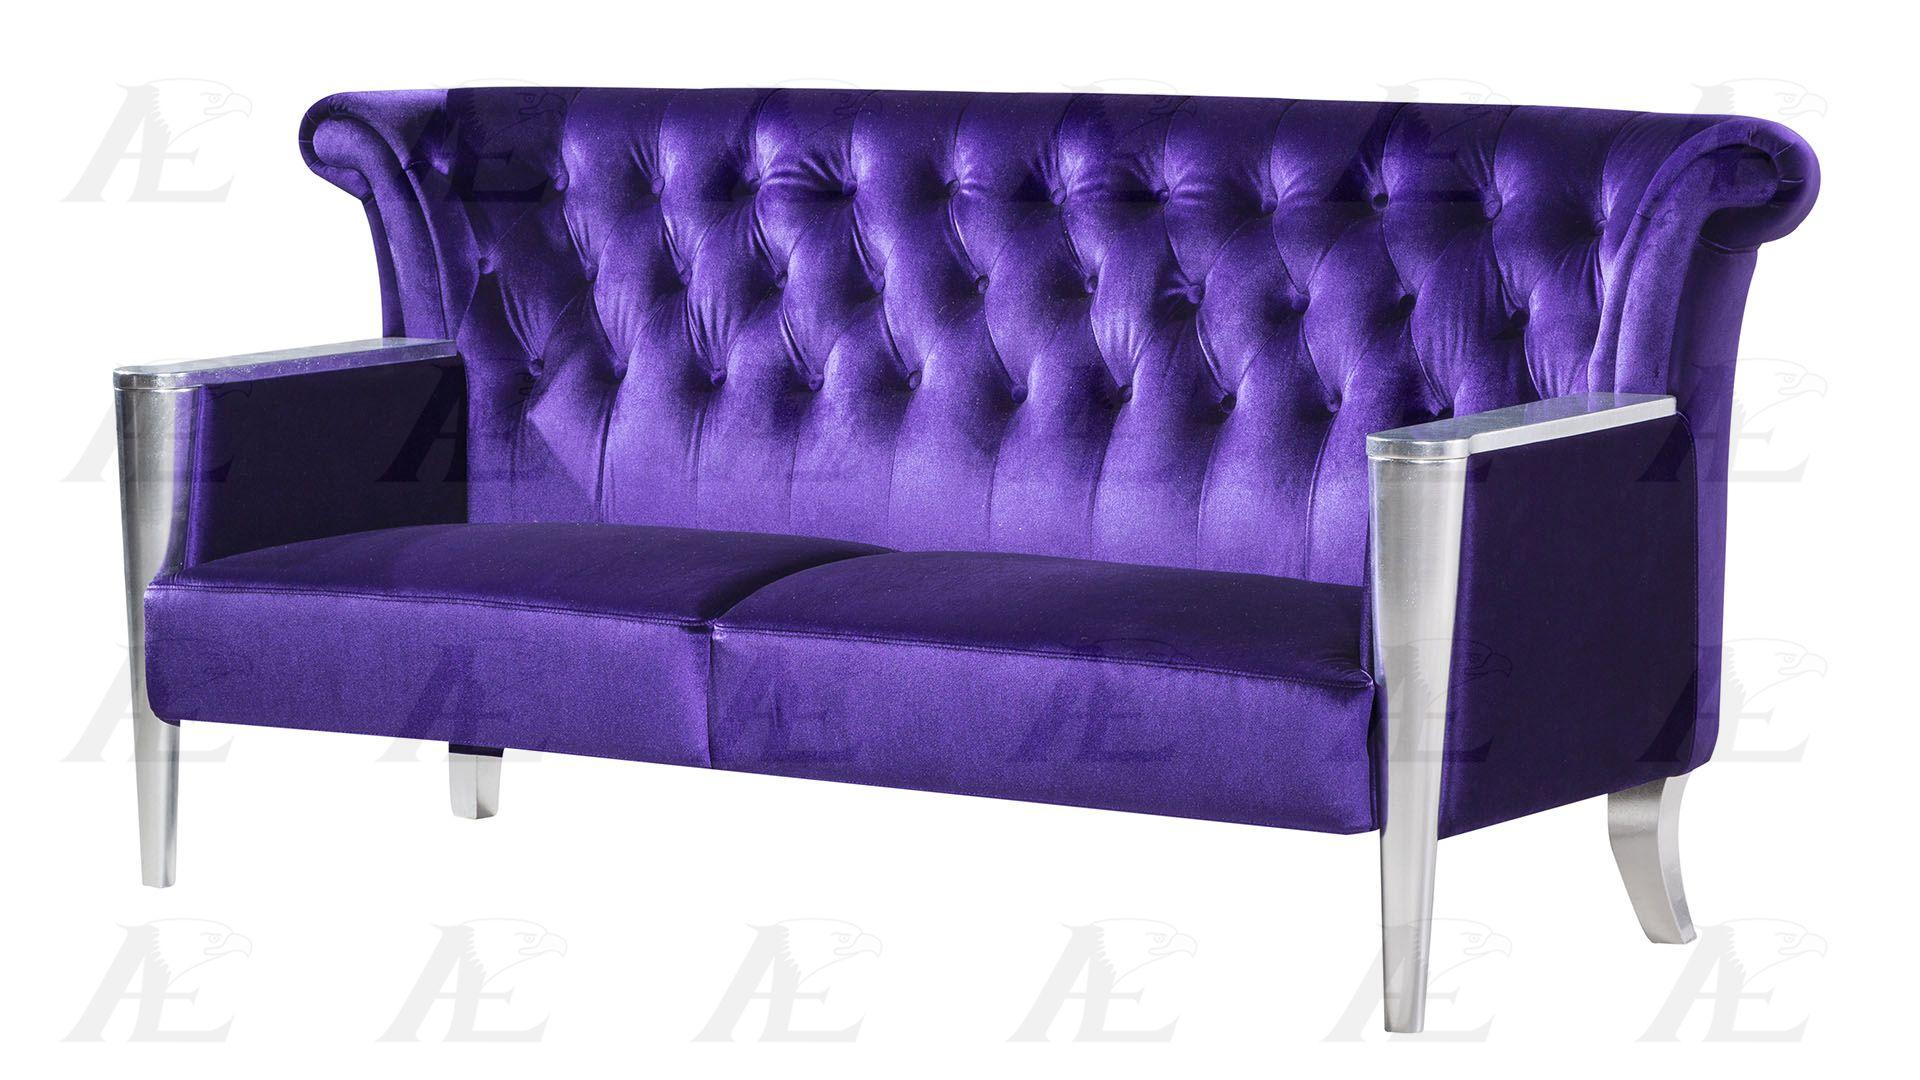 

                    
American Eagle Furniture AE592 Sofa and Loveseat Set Purple Fabric Purchase 
